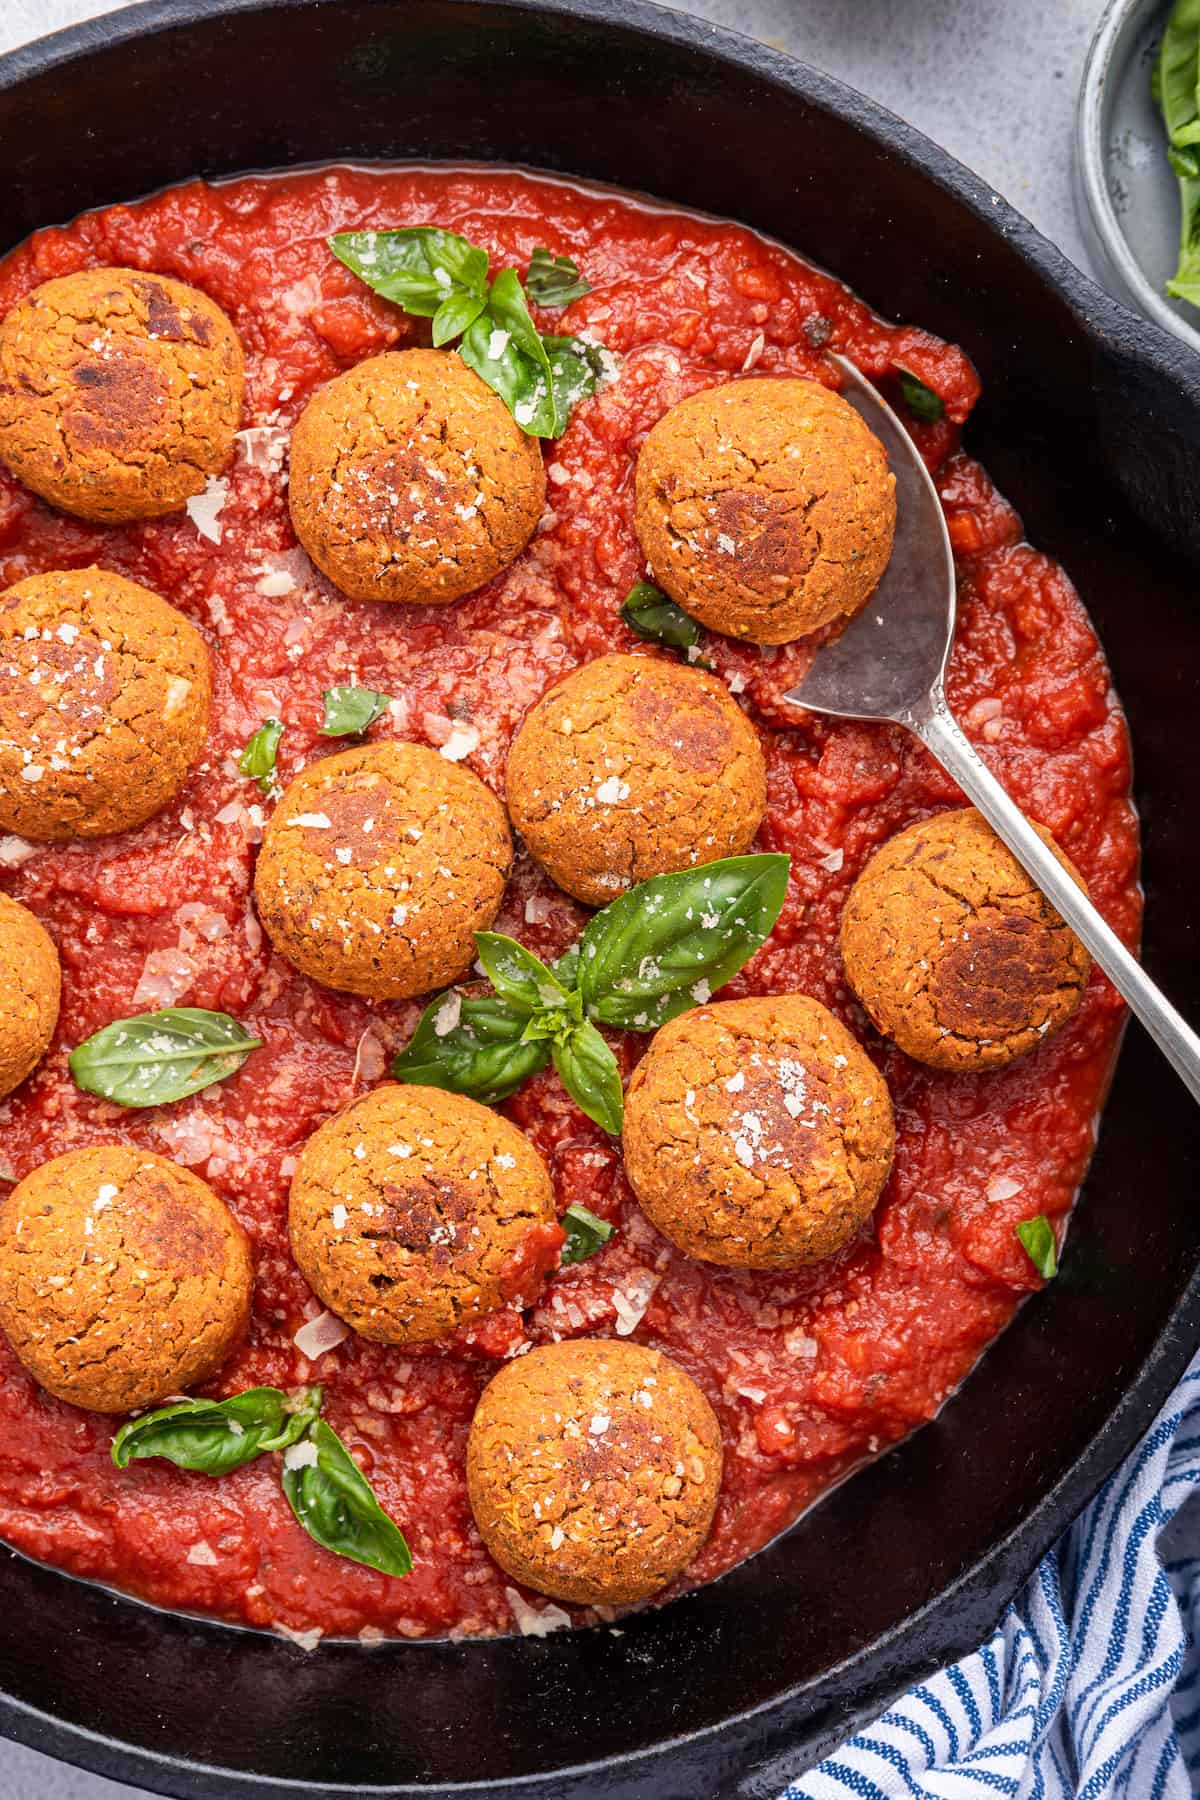 Overhead view of vegan meatballs in skillet of tomato sauce